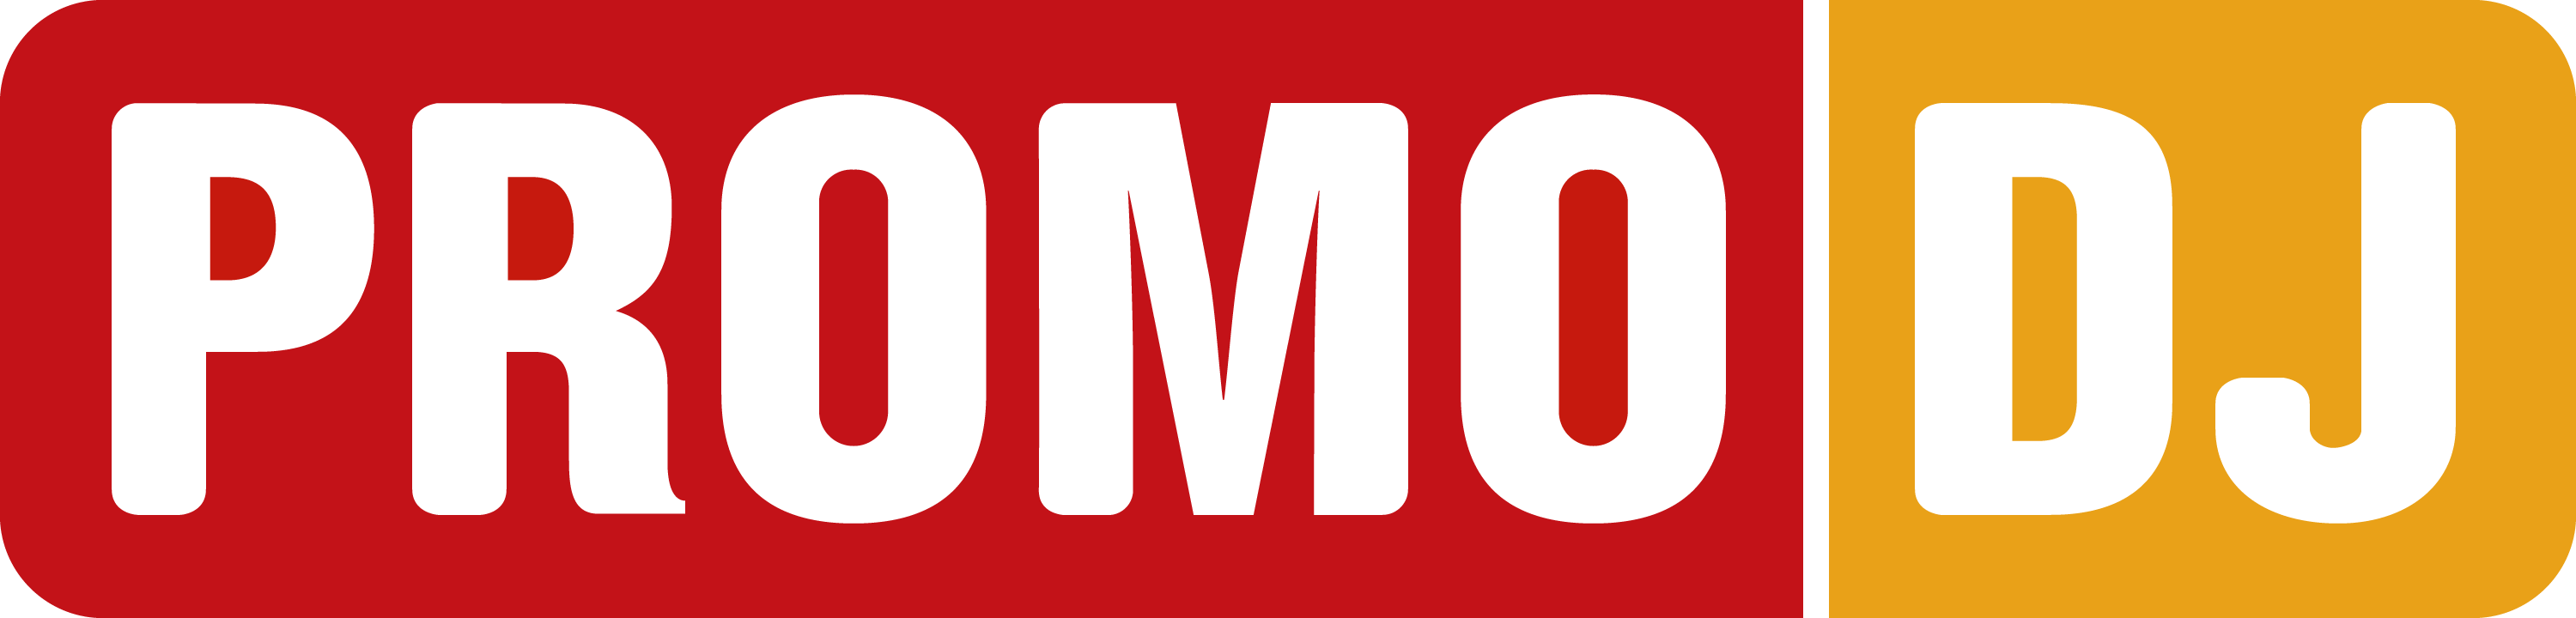 Promo Logo - Logos